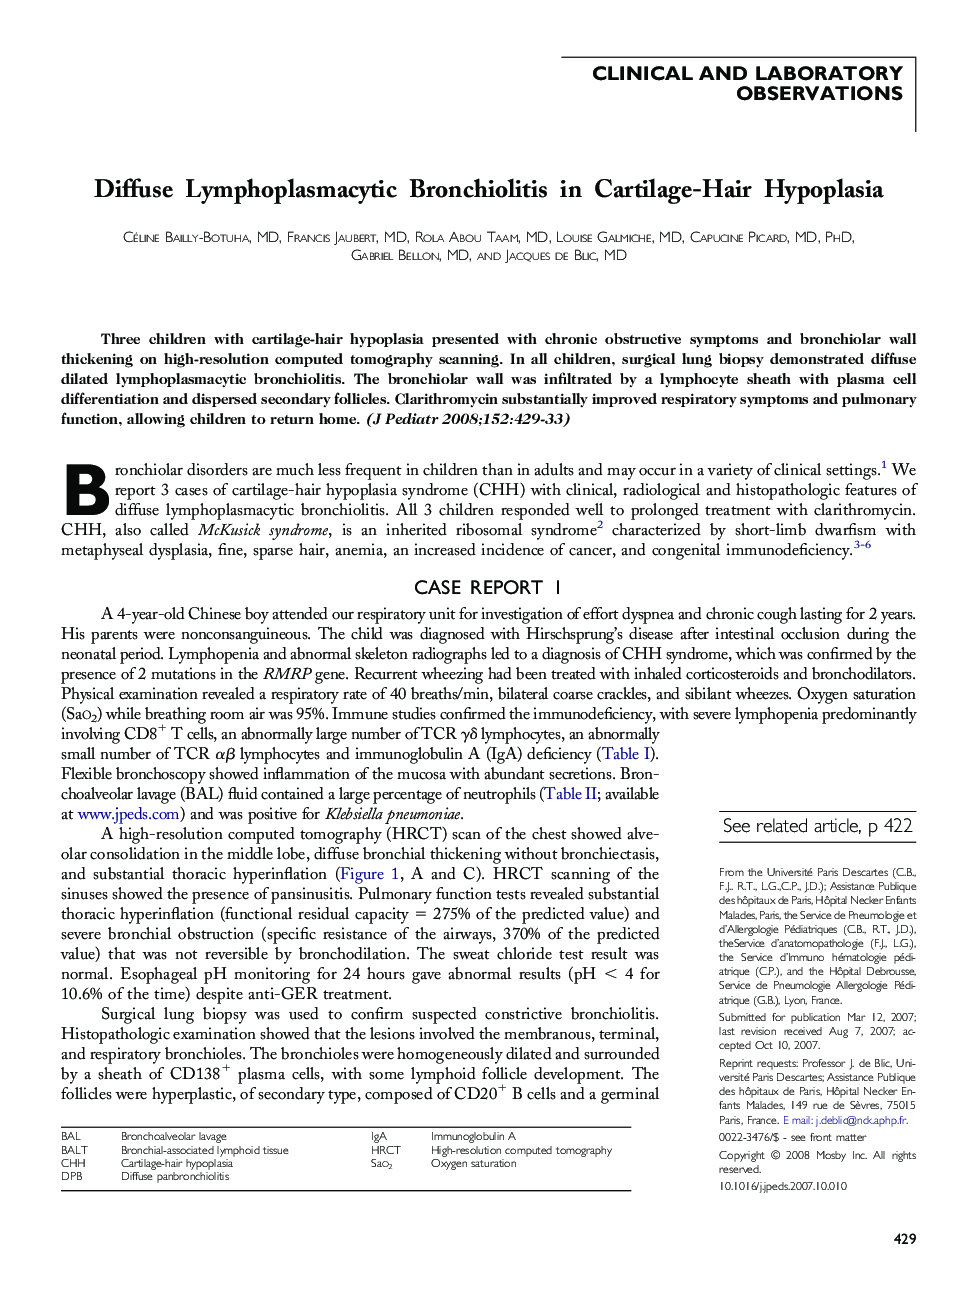 Diffuse Lymphoplasmacytic Bronchiolitis in Cartilage-Hair Hypoplasia